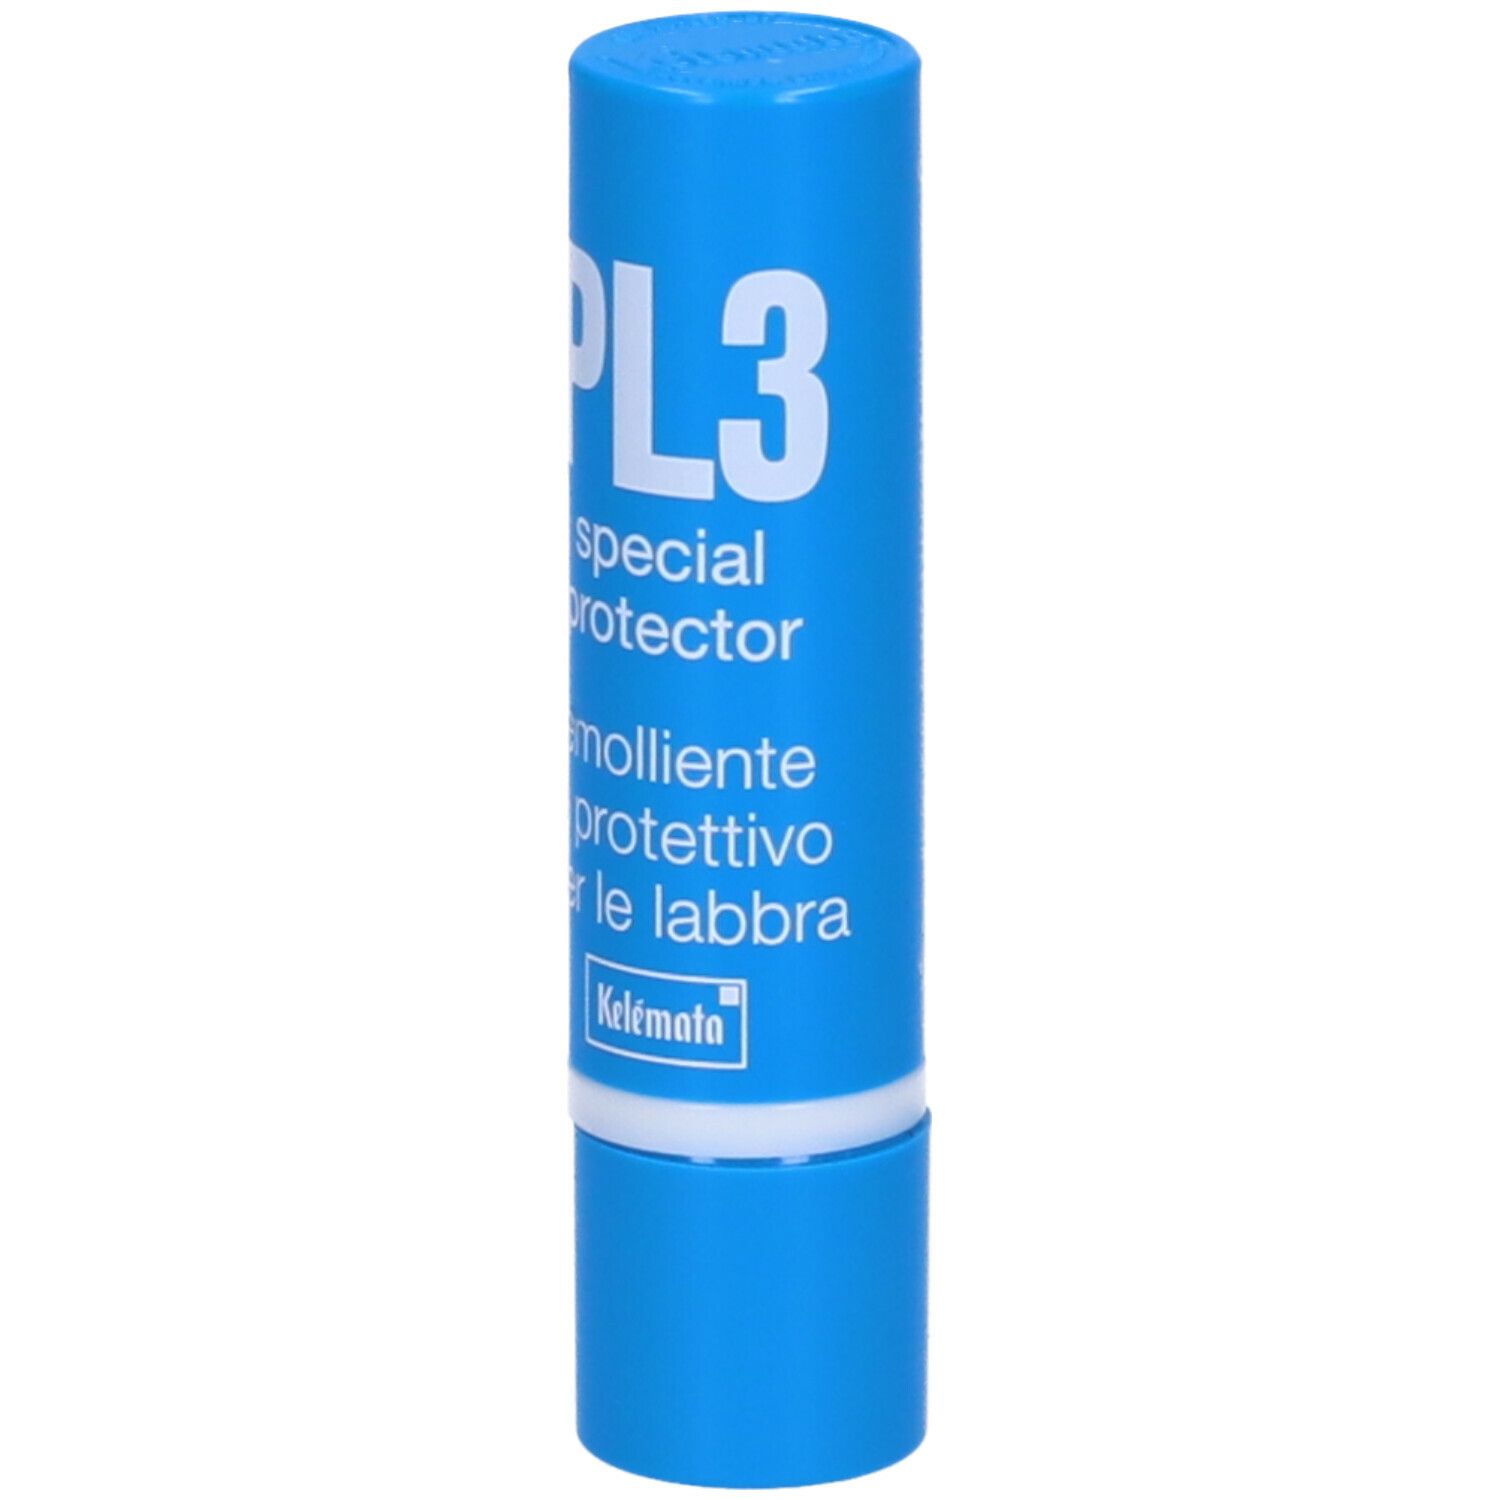 PL3 Special Protector